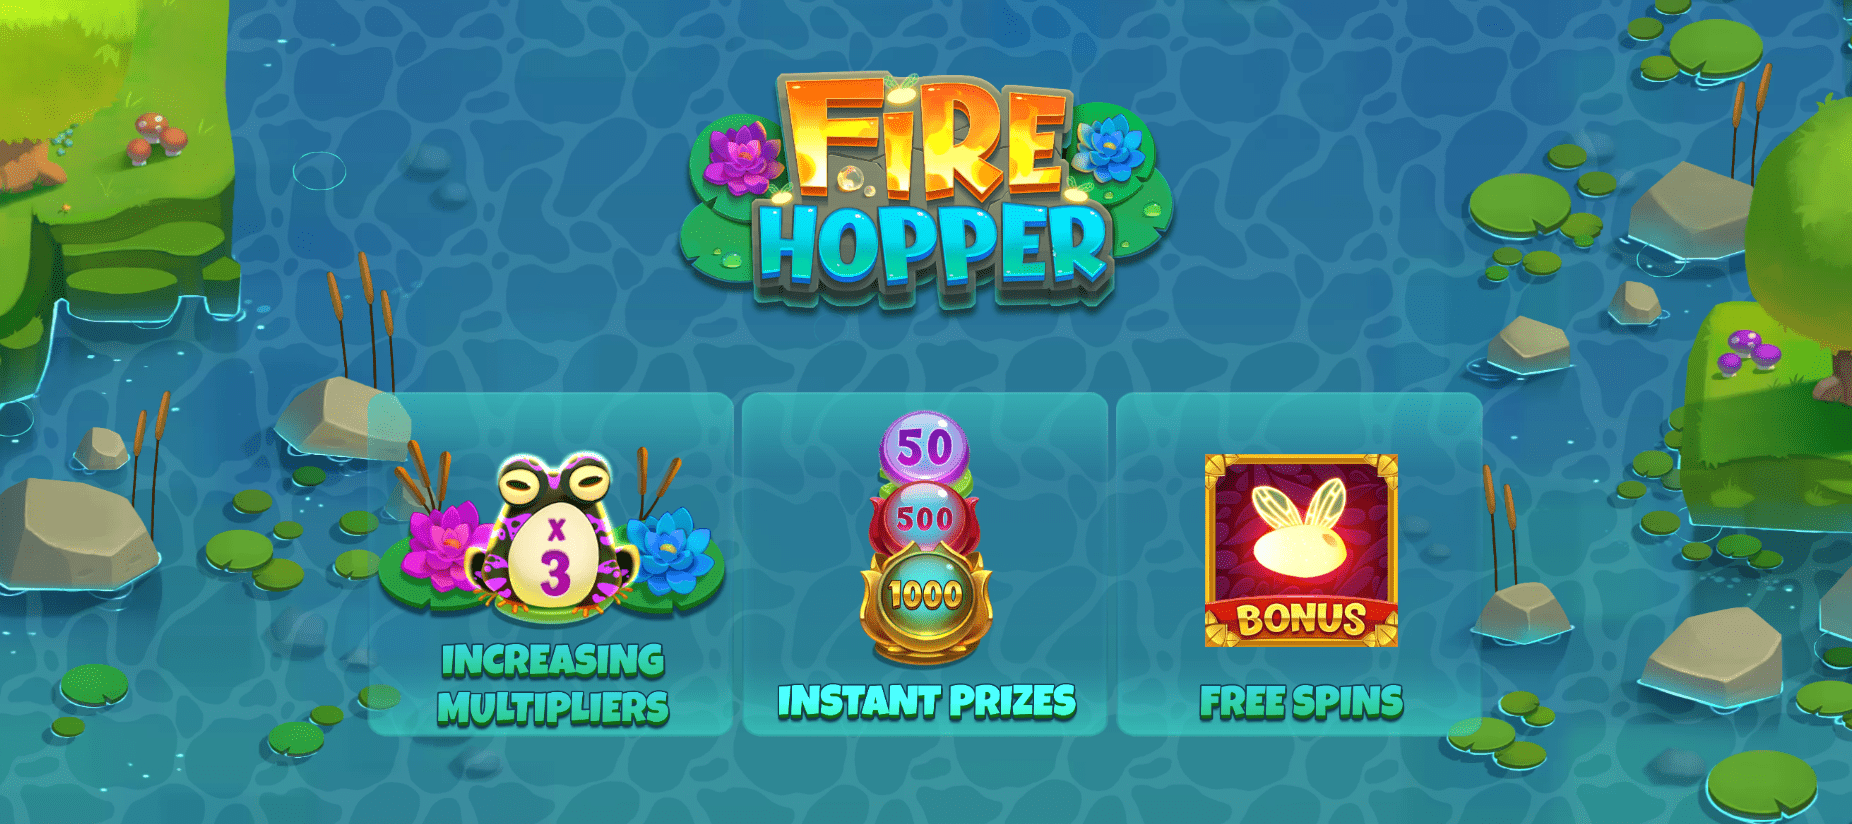 Fire hopper slot